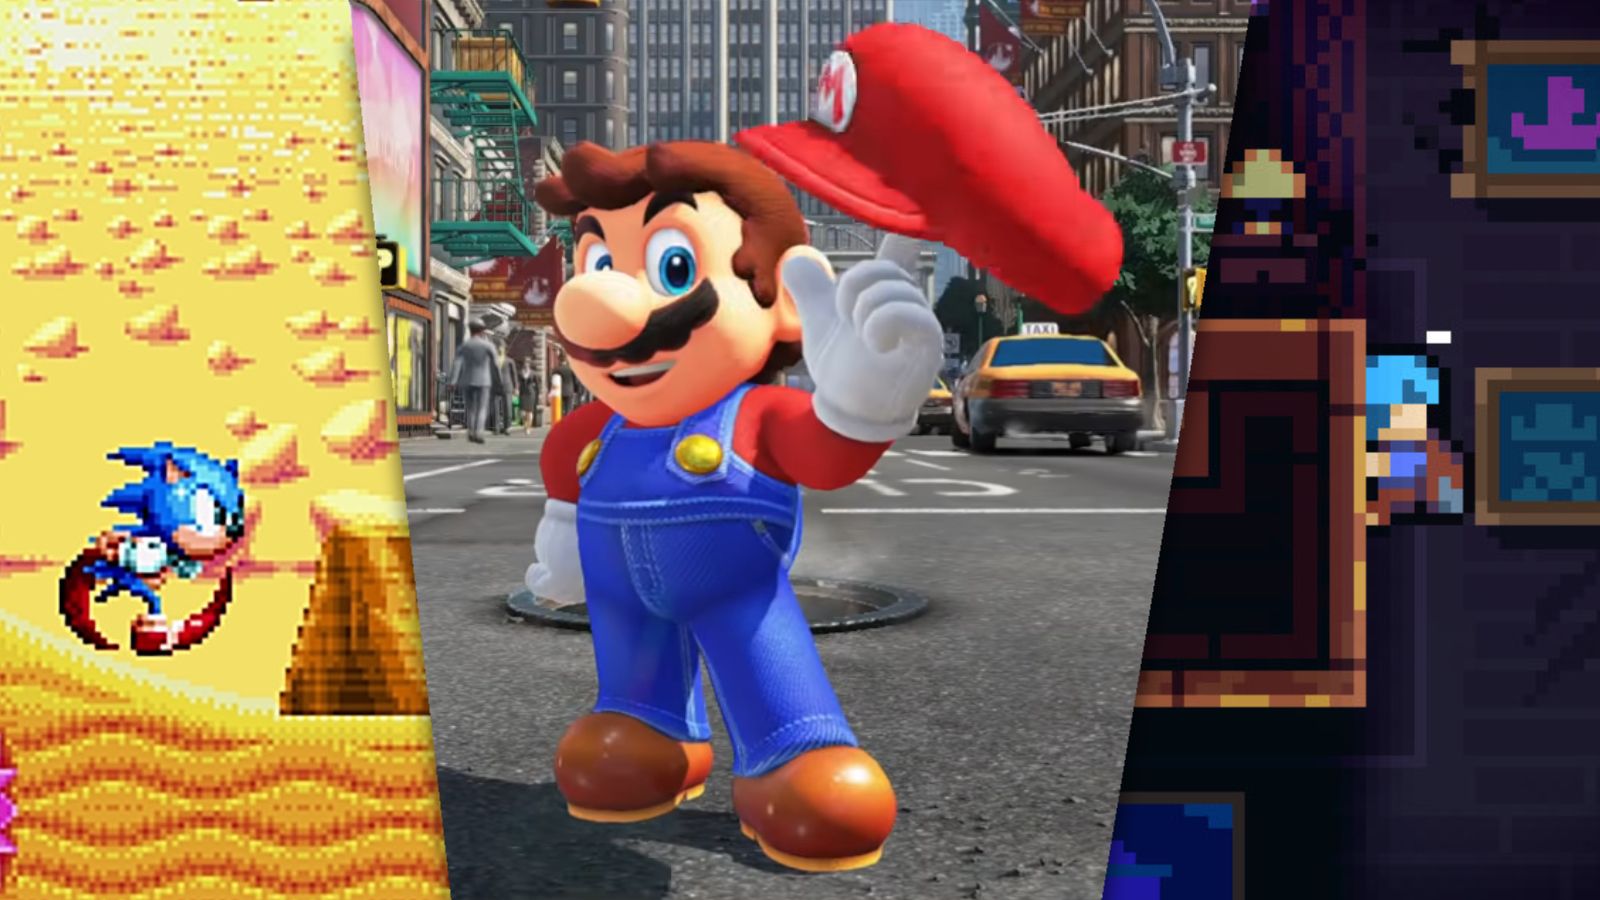 Mario Odyssey Speedrun categories have been established and runs